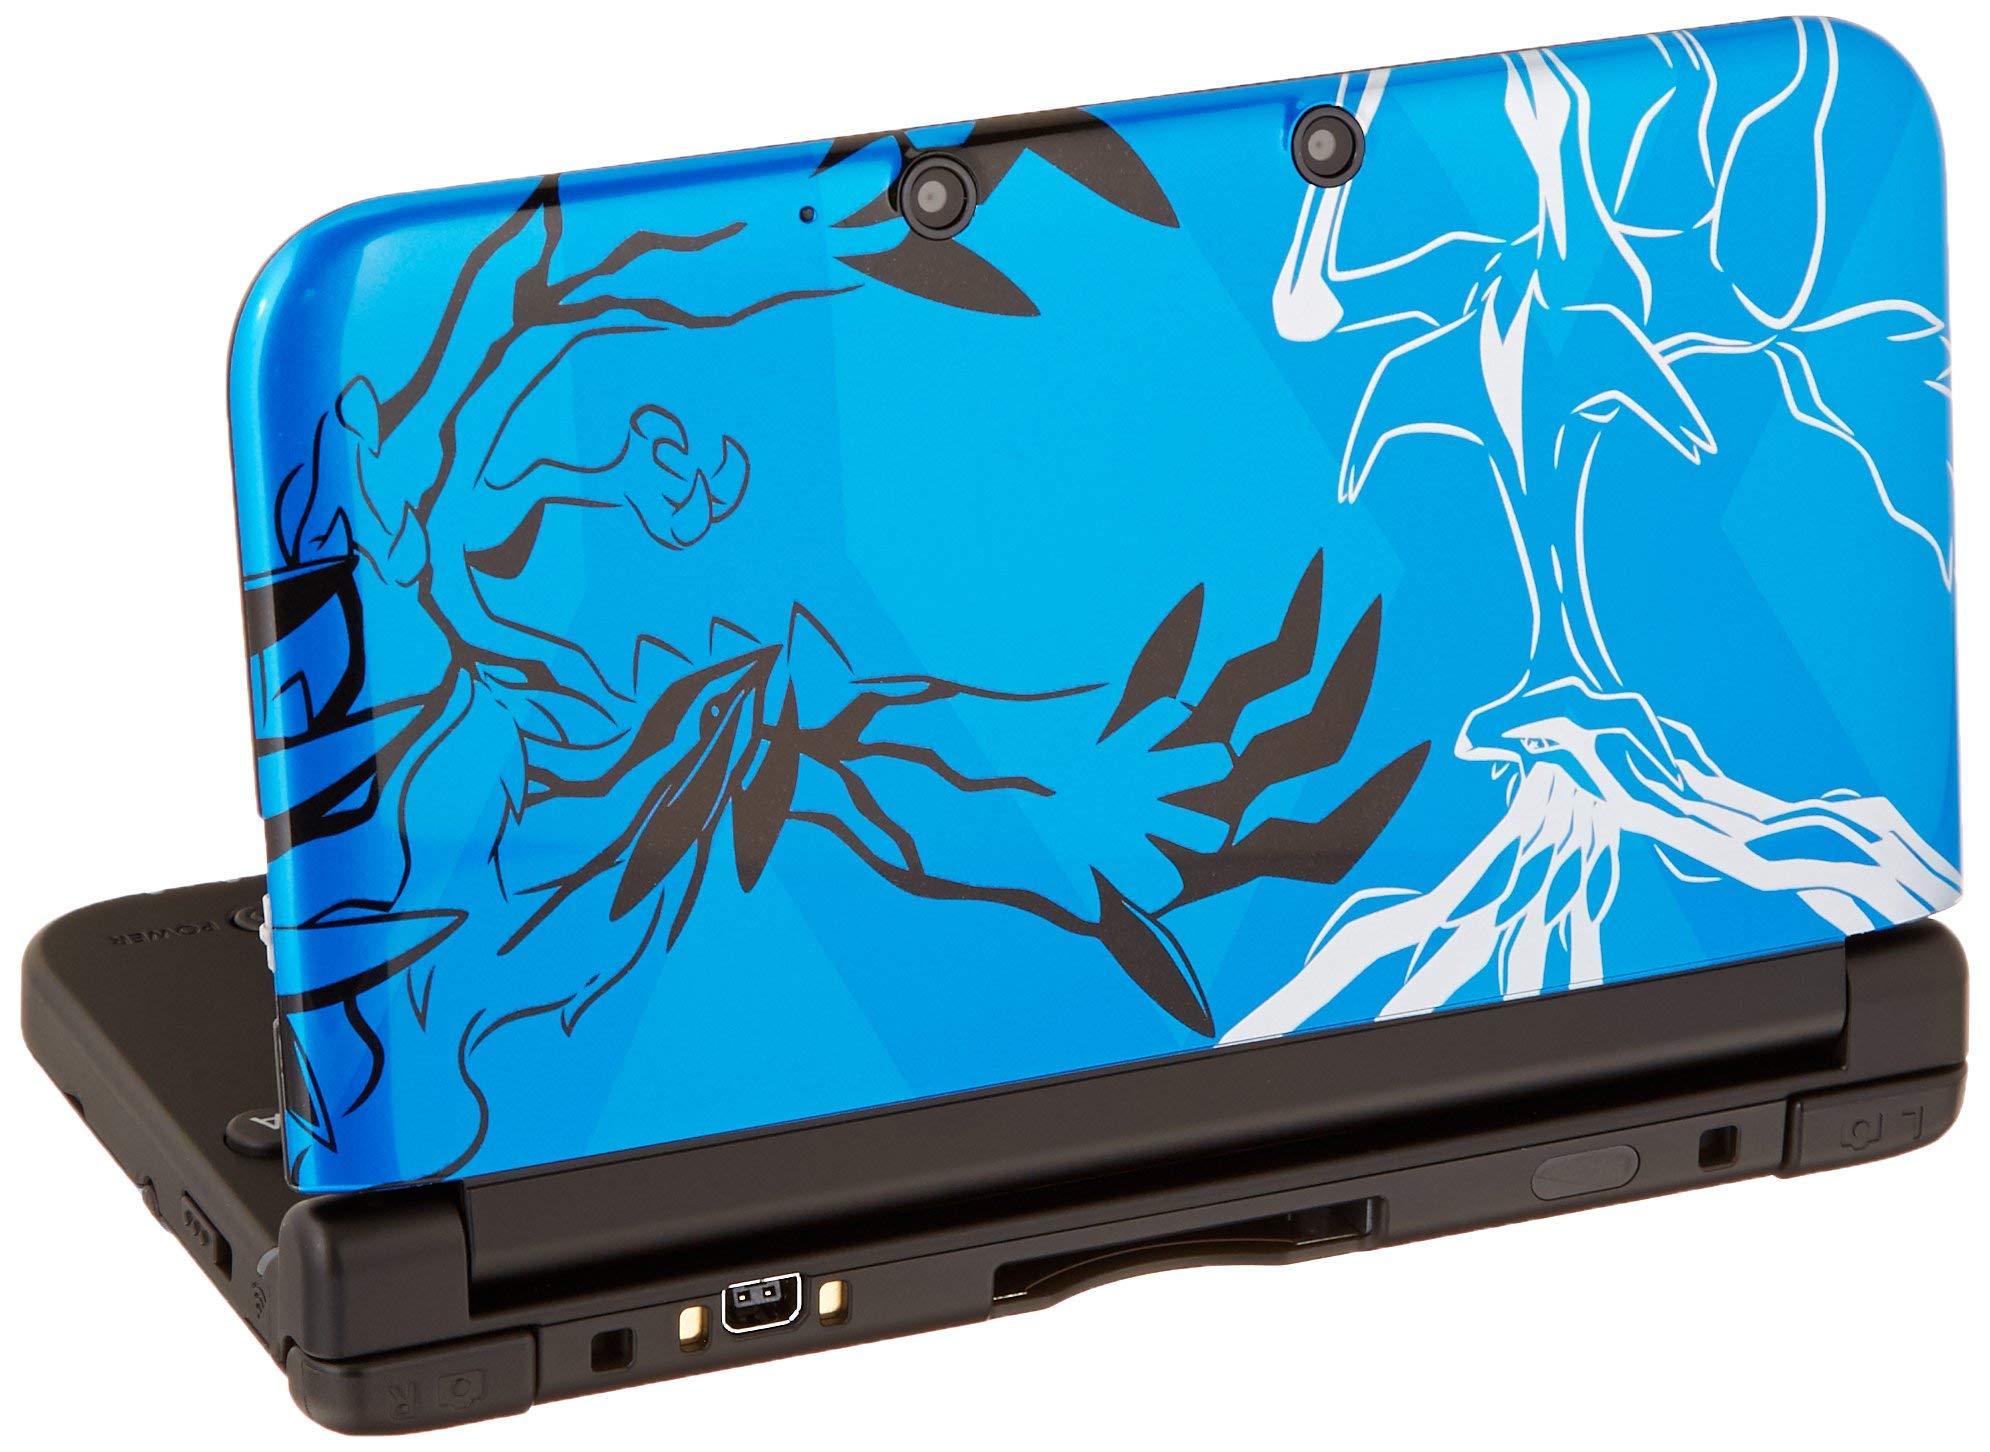 Nintendo Pokemon X & Y Limited Edition 3 DS XL (Blue) (Renewed)